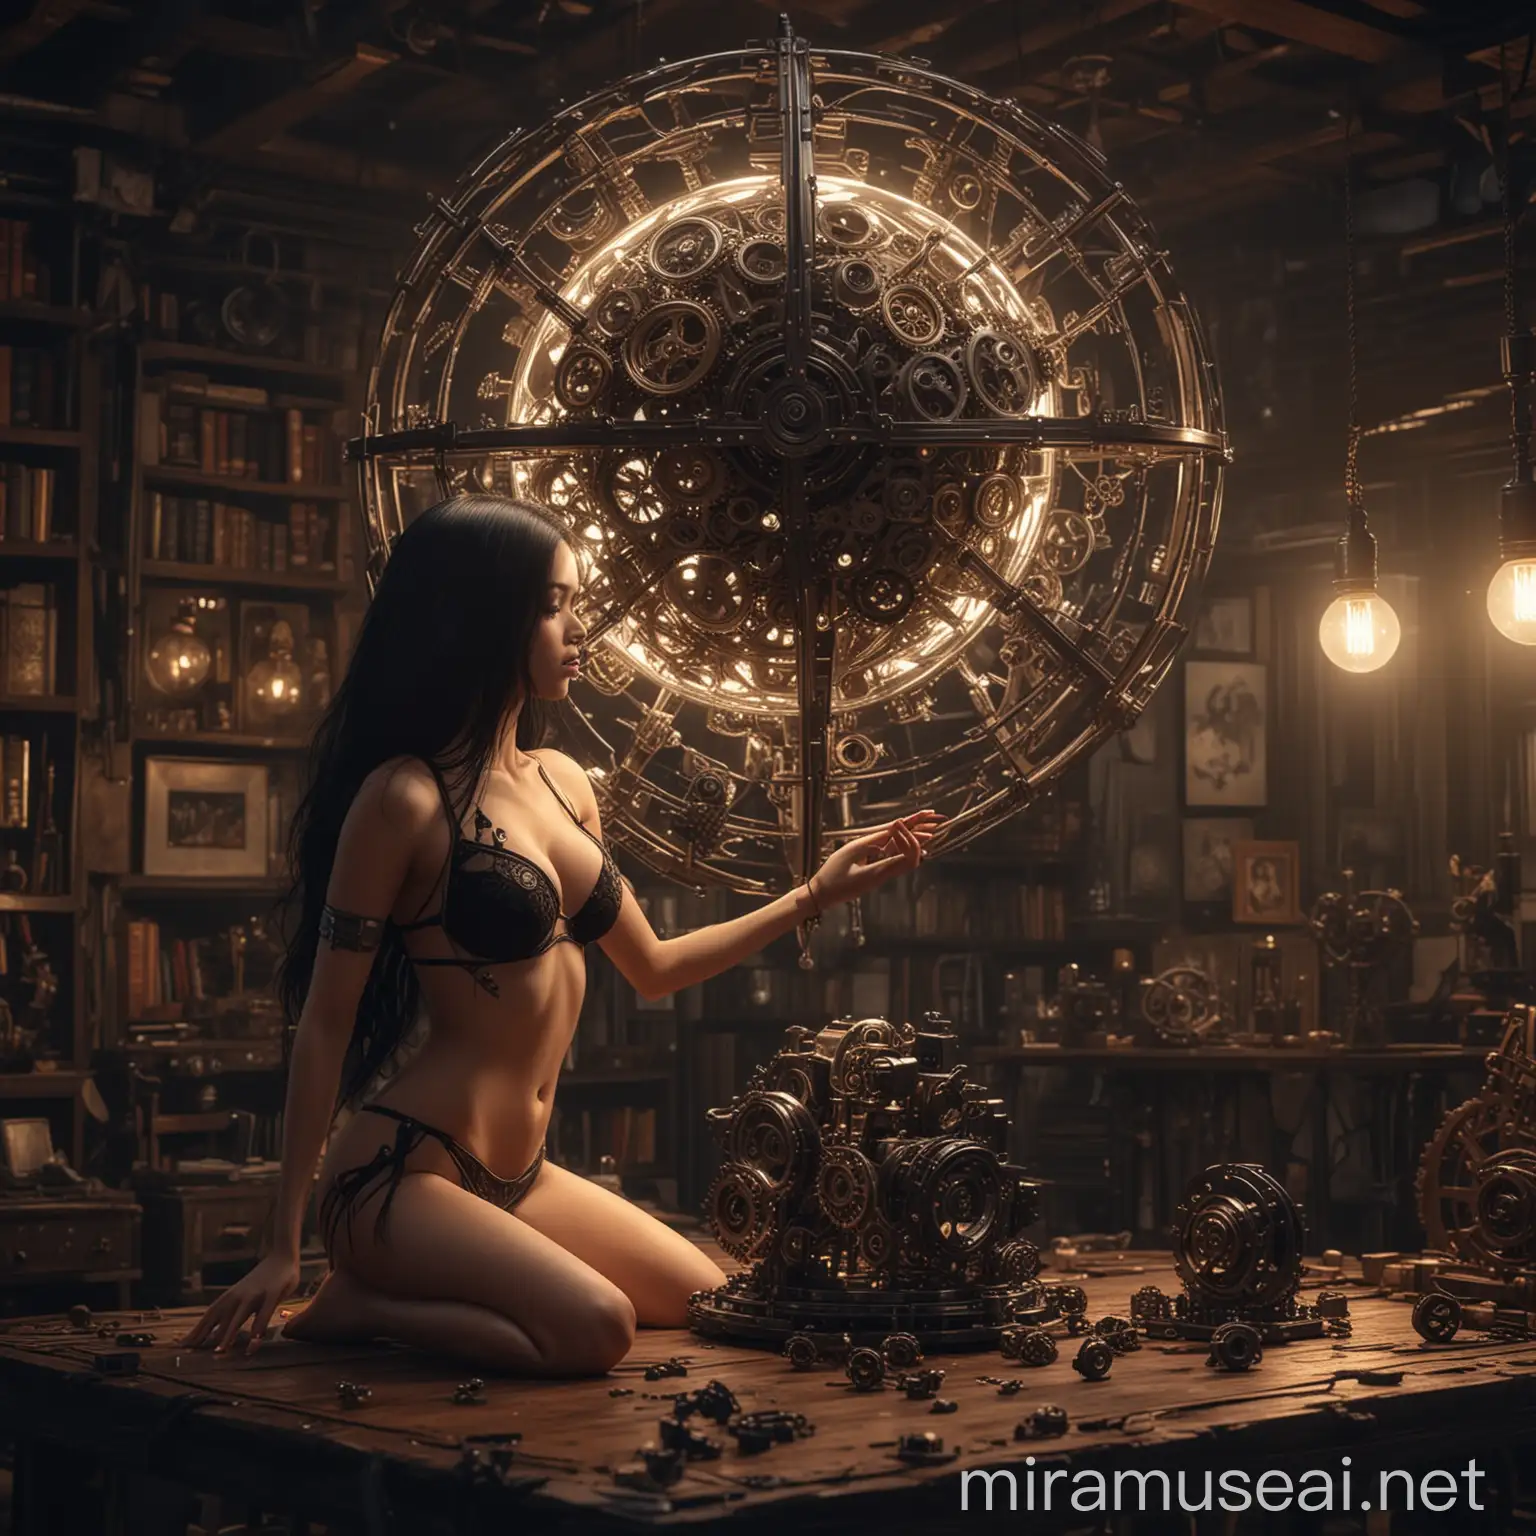 Indonesian Woman Crafting Magical Sphere in Cyberpunk Setting